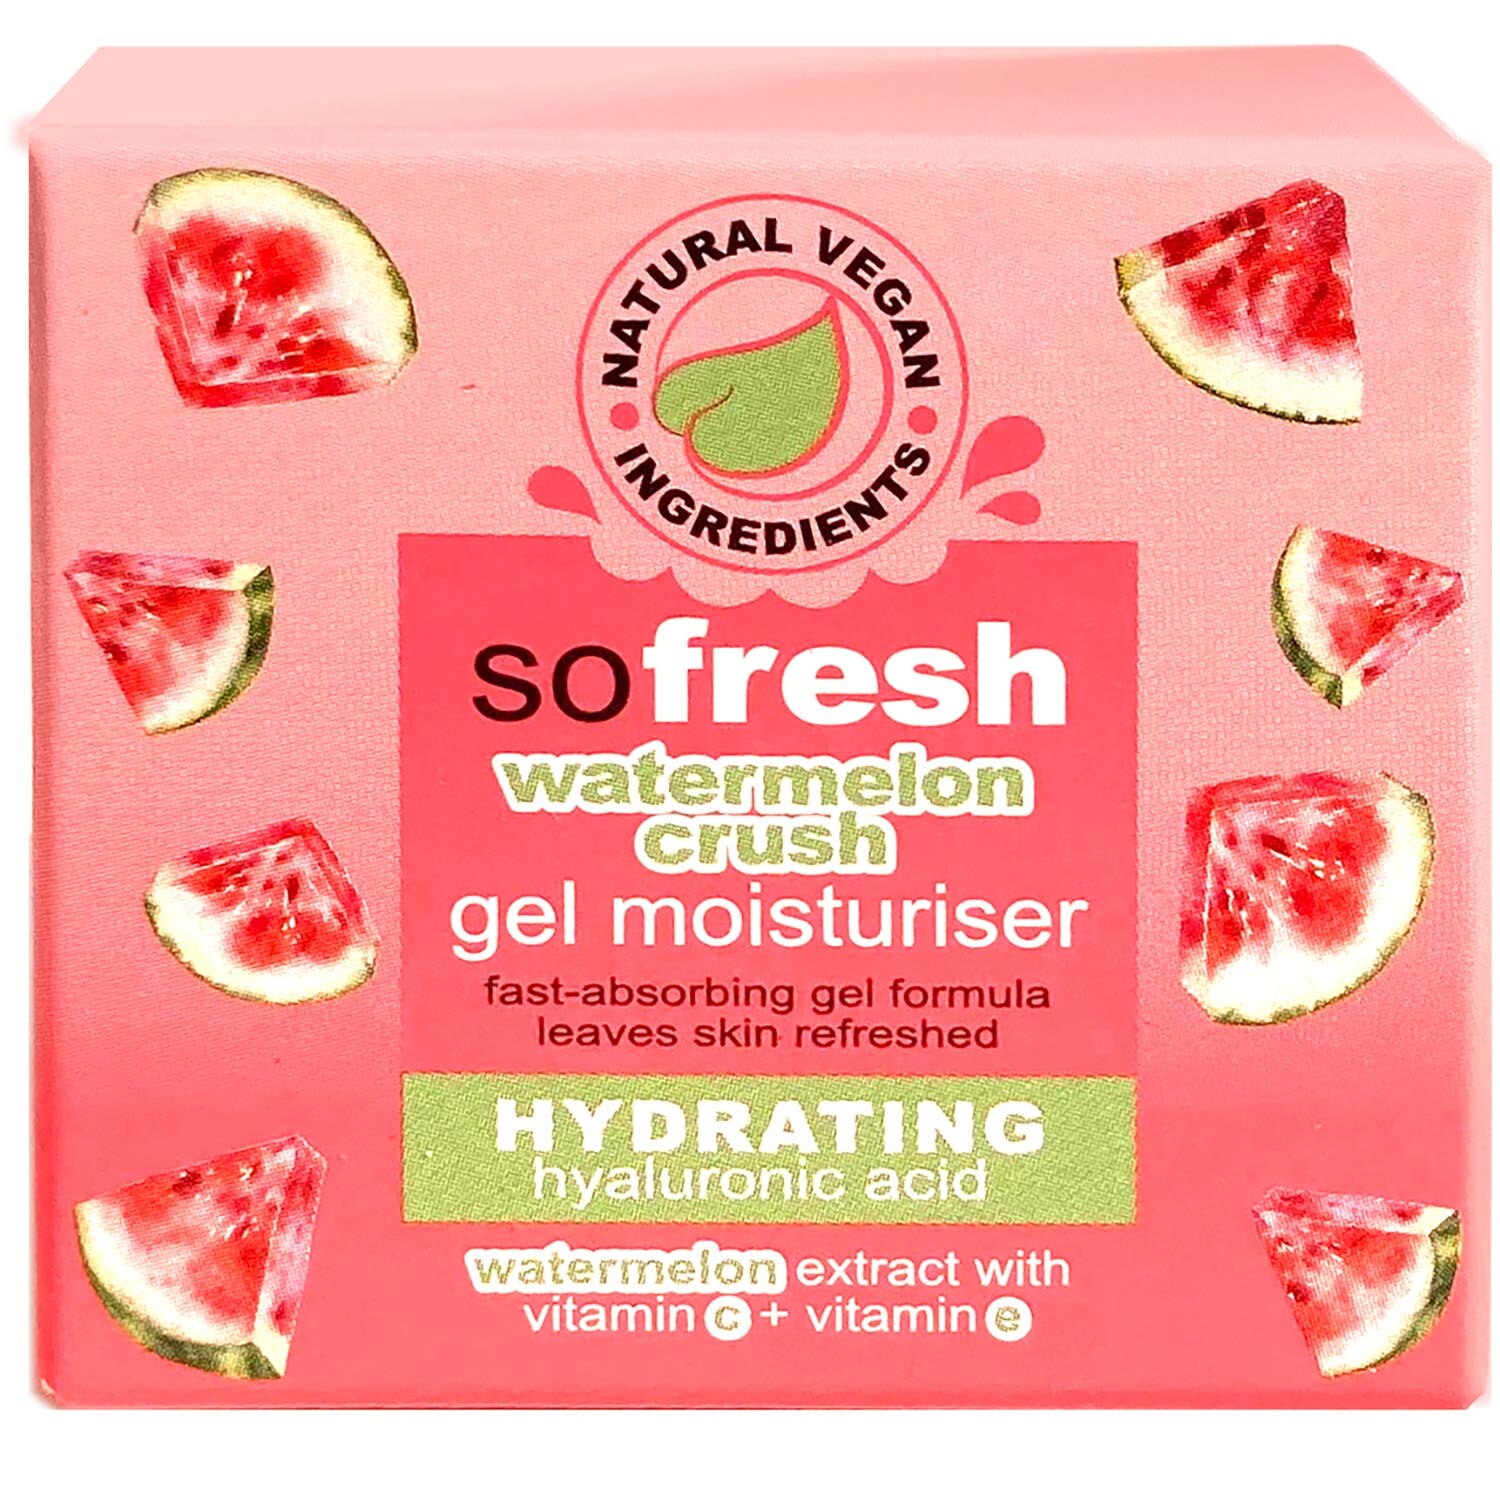 SoFresh Watermelon Crush Gel Moisturiser - Pink Image 1